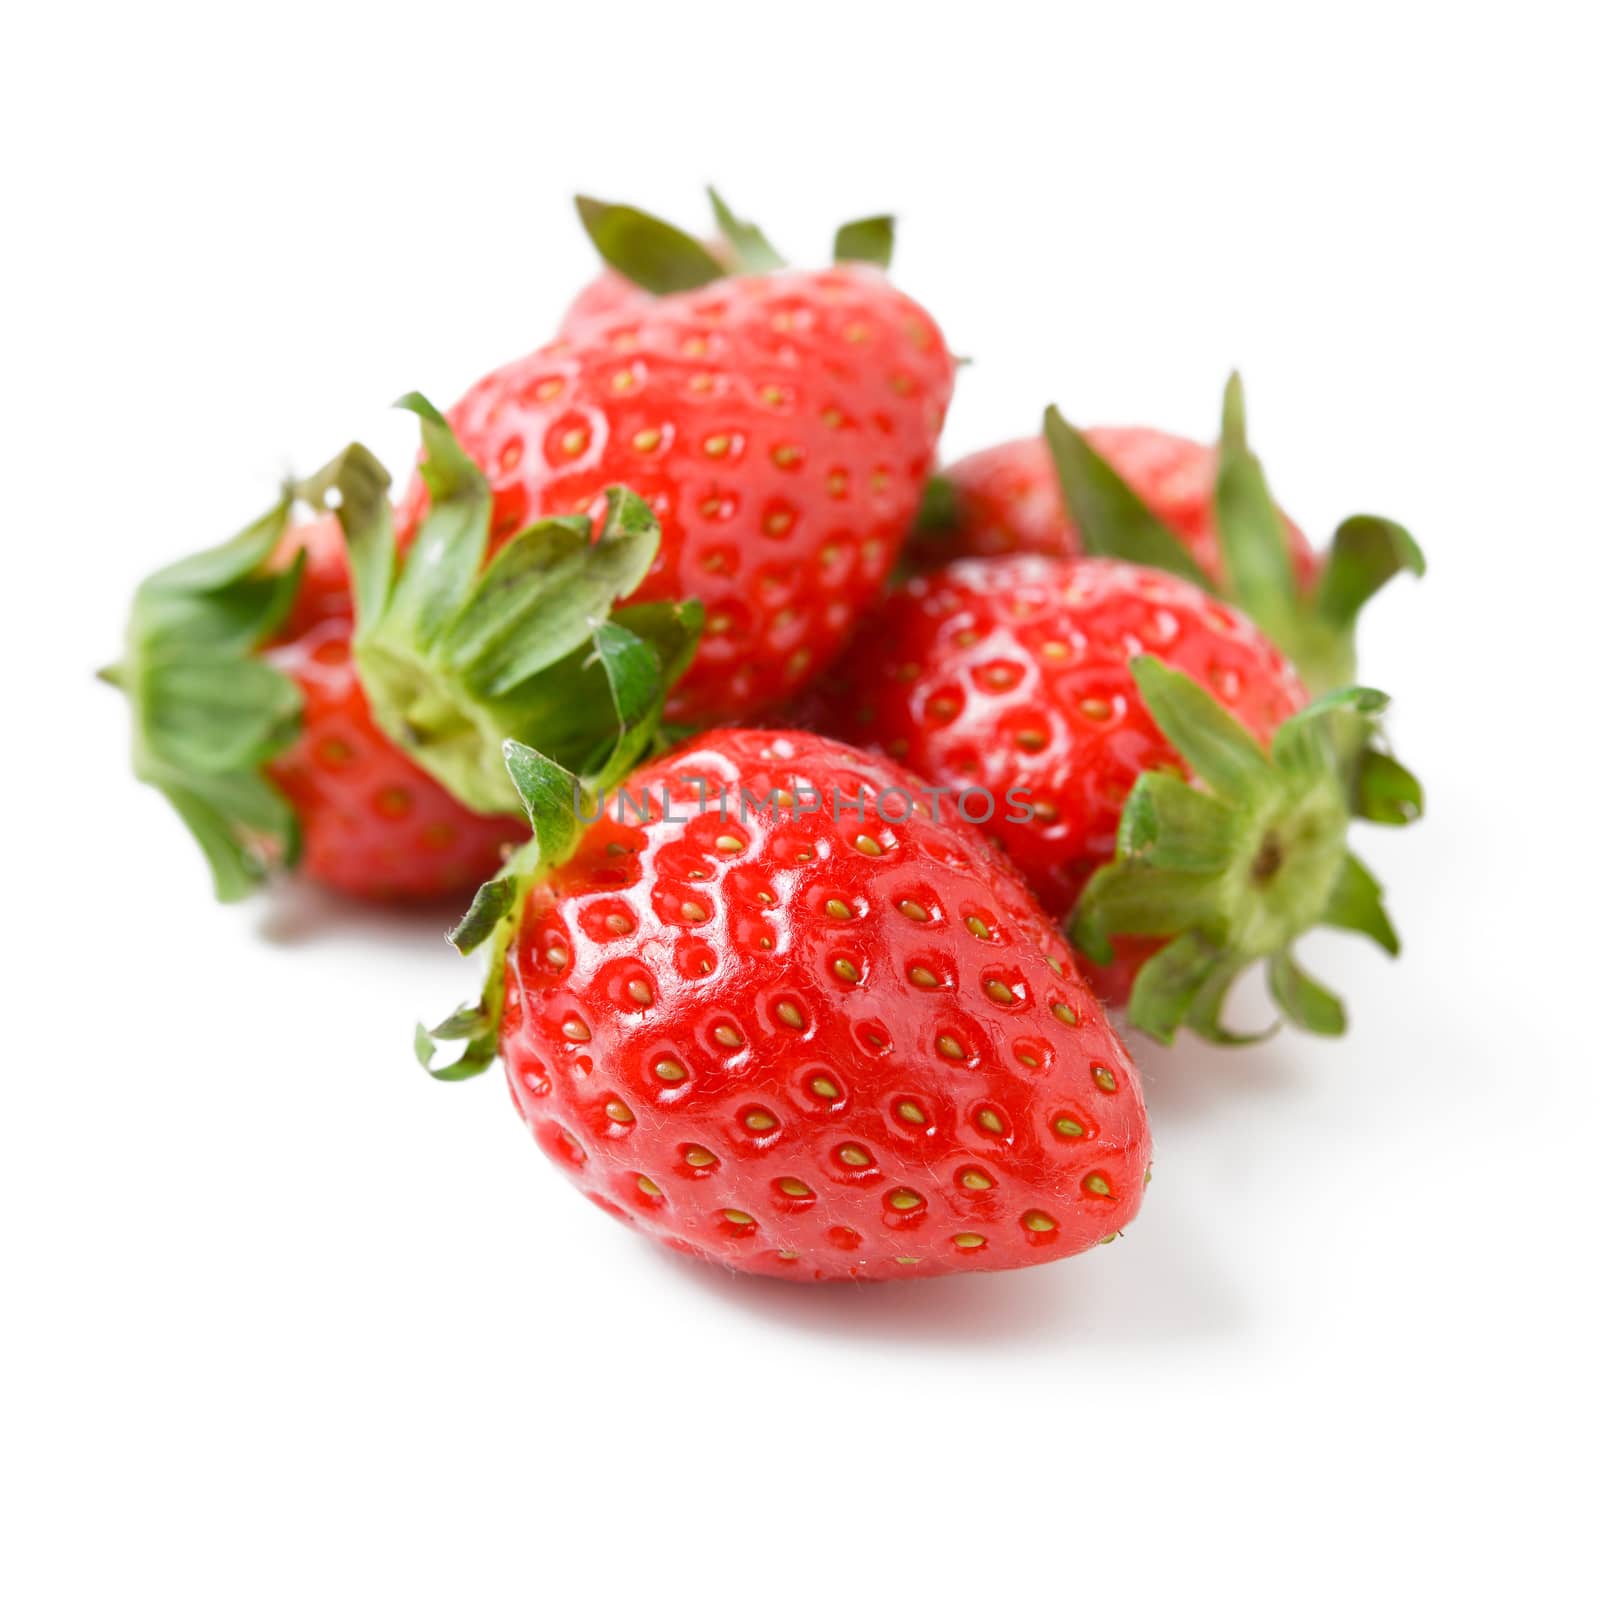 strawberry by antpkr